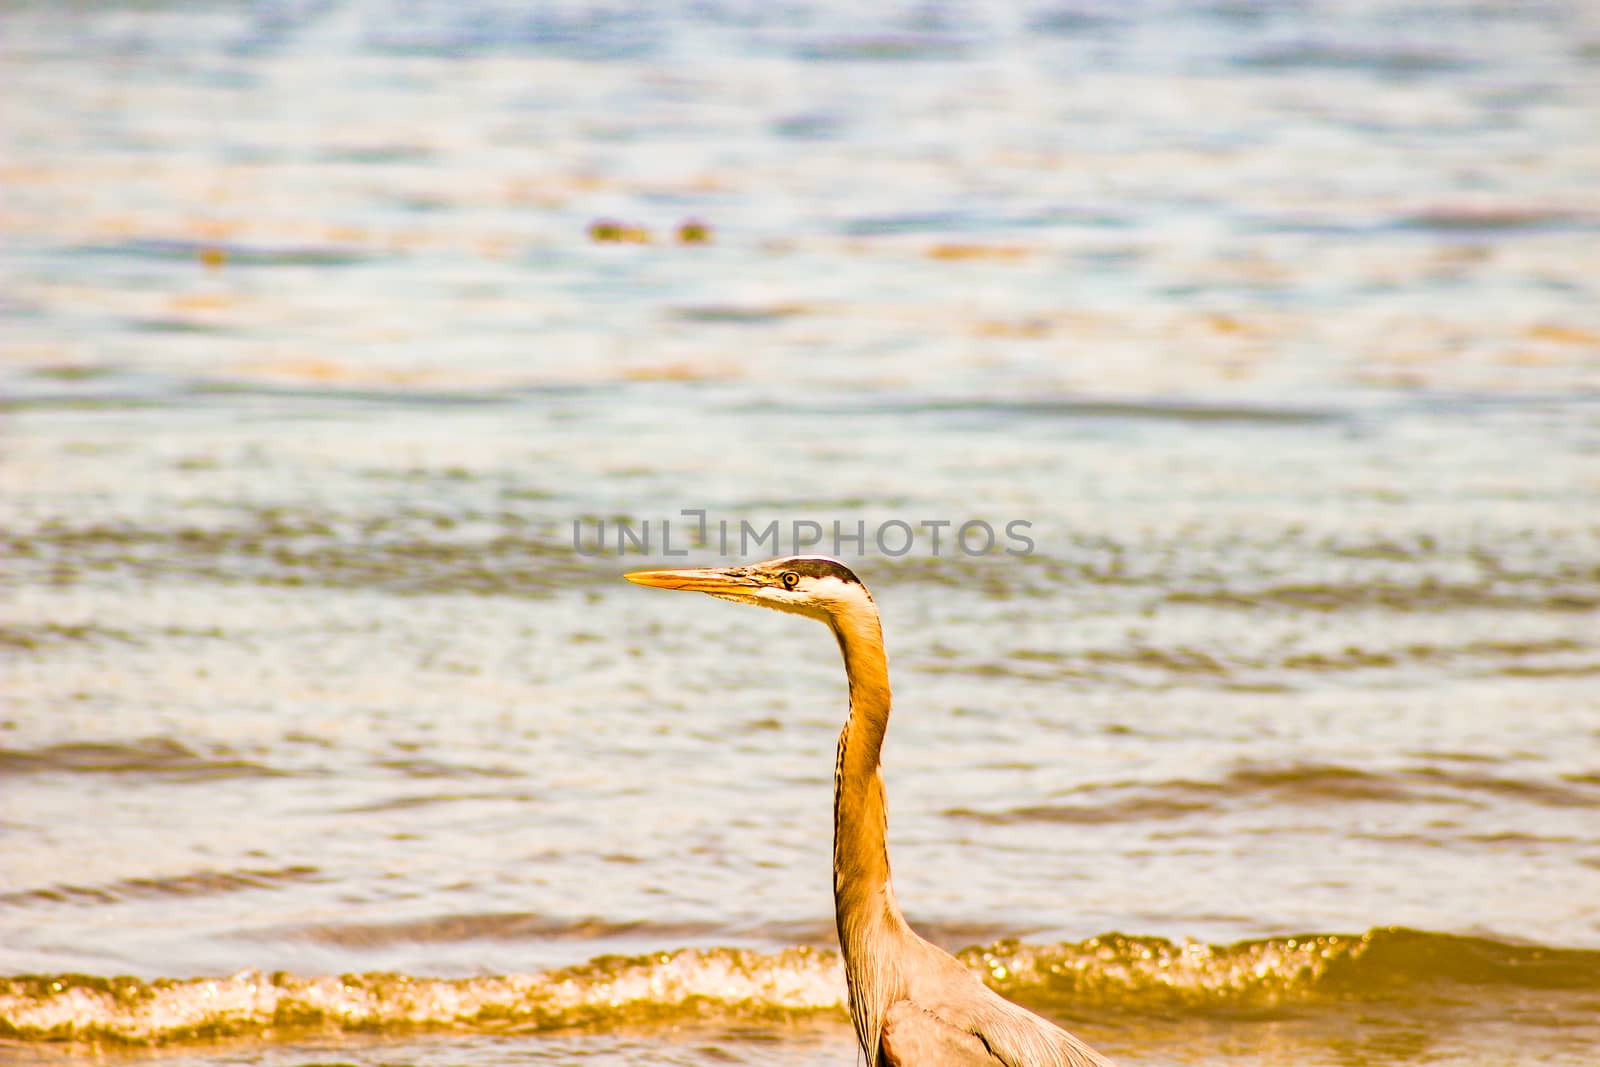 Great Blue Heron On A Gulf Coast Beach With Waves by mynewturtle1